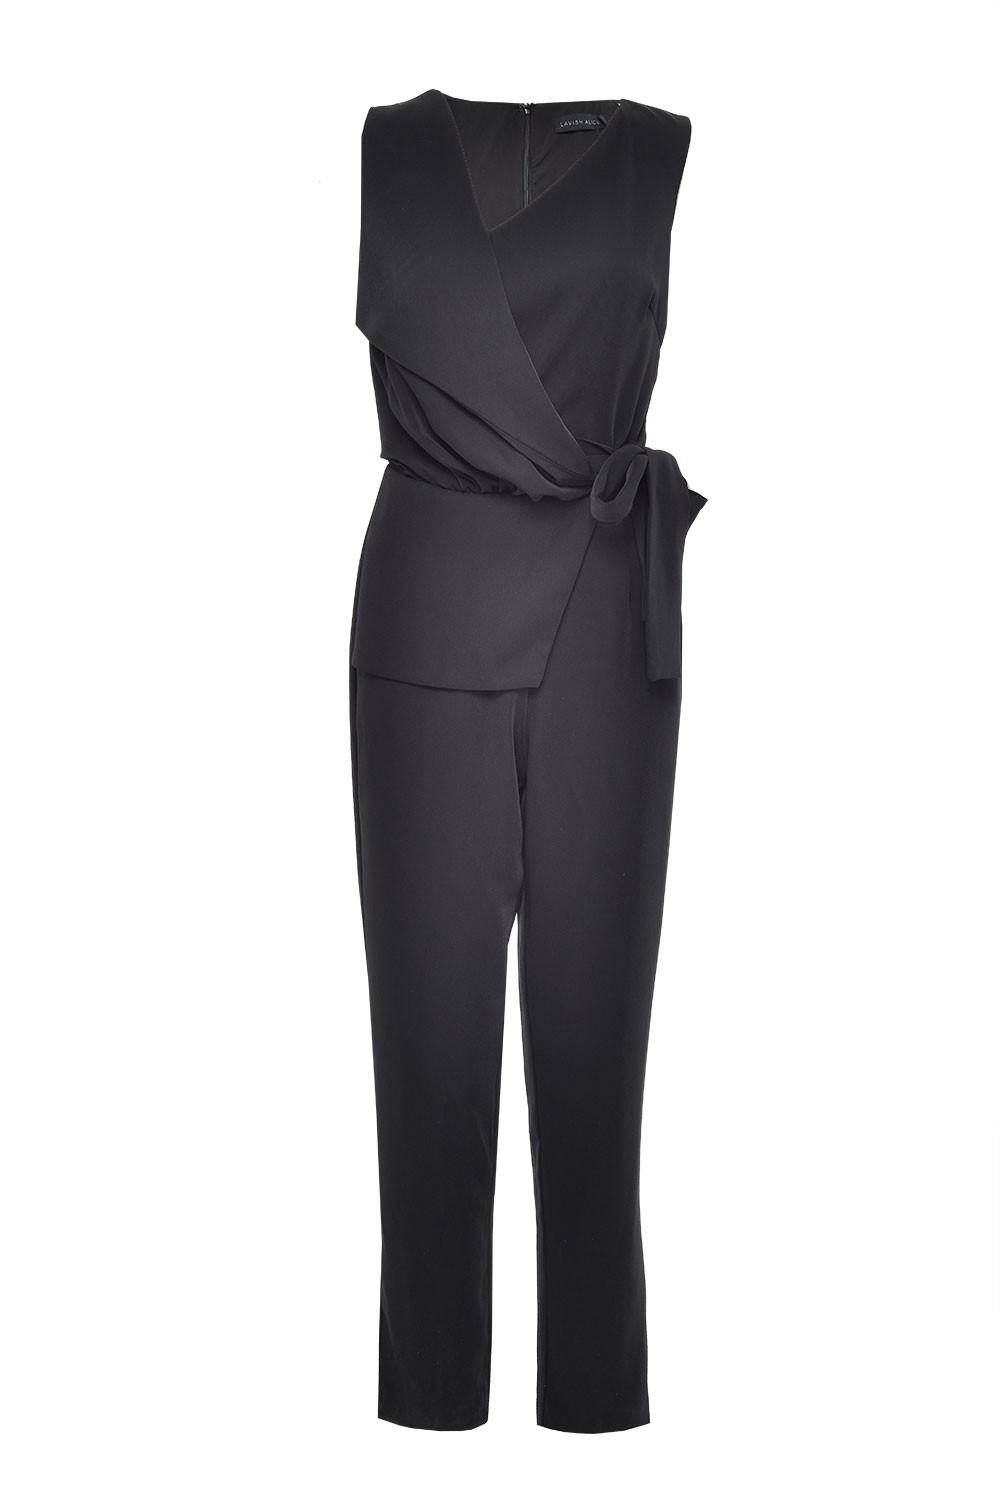 Lavish Alice Tara Folded Jumpsuit in Black | iCLOTHING